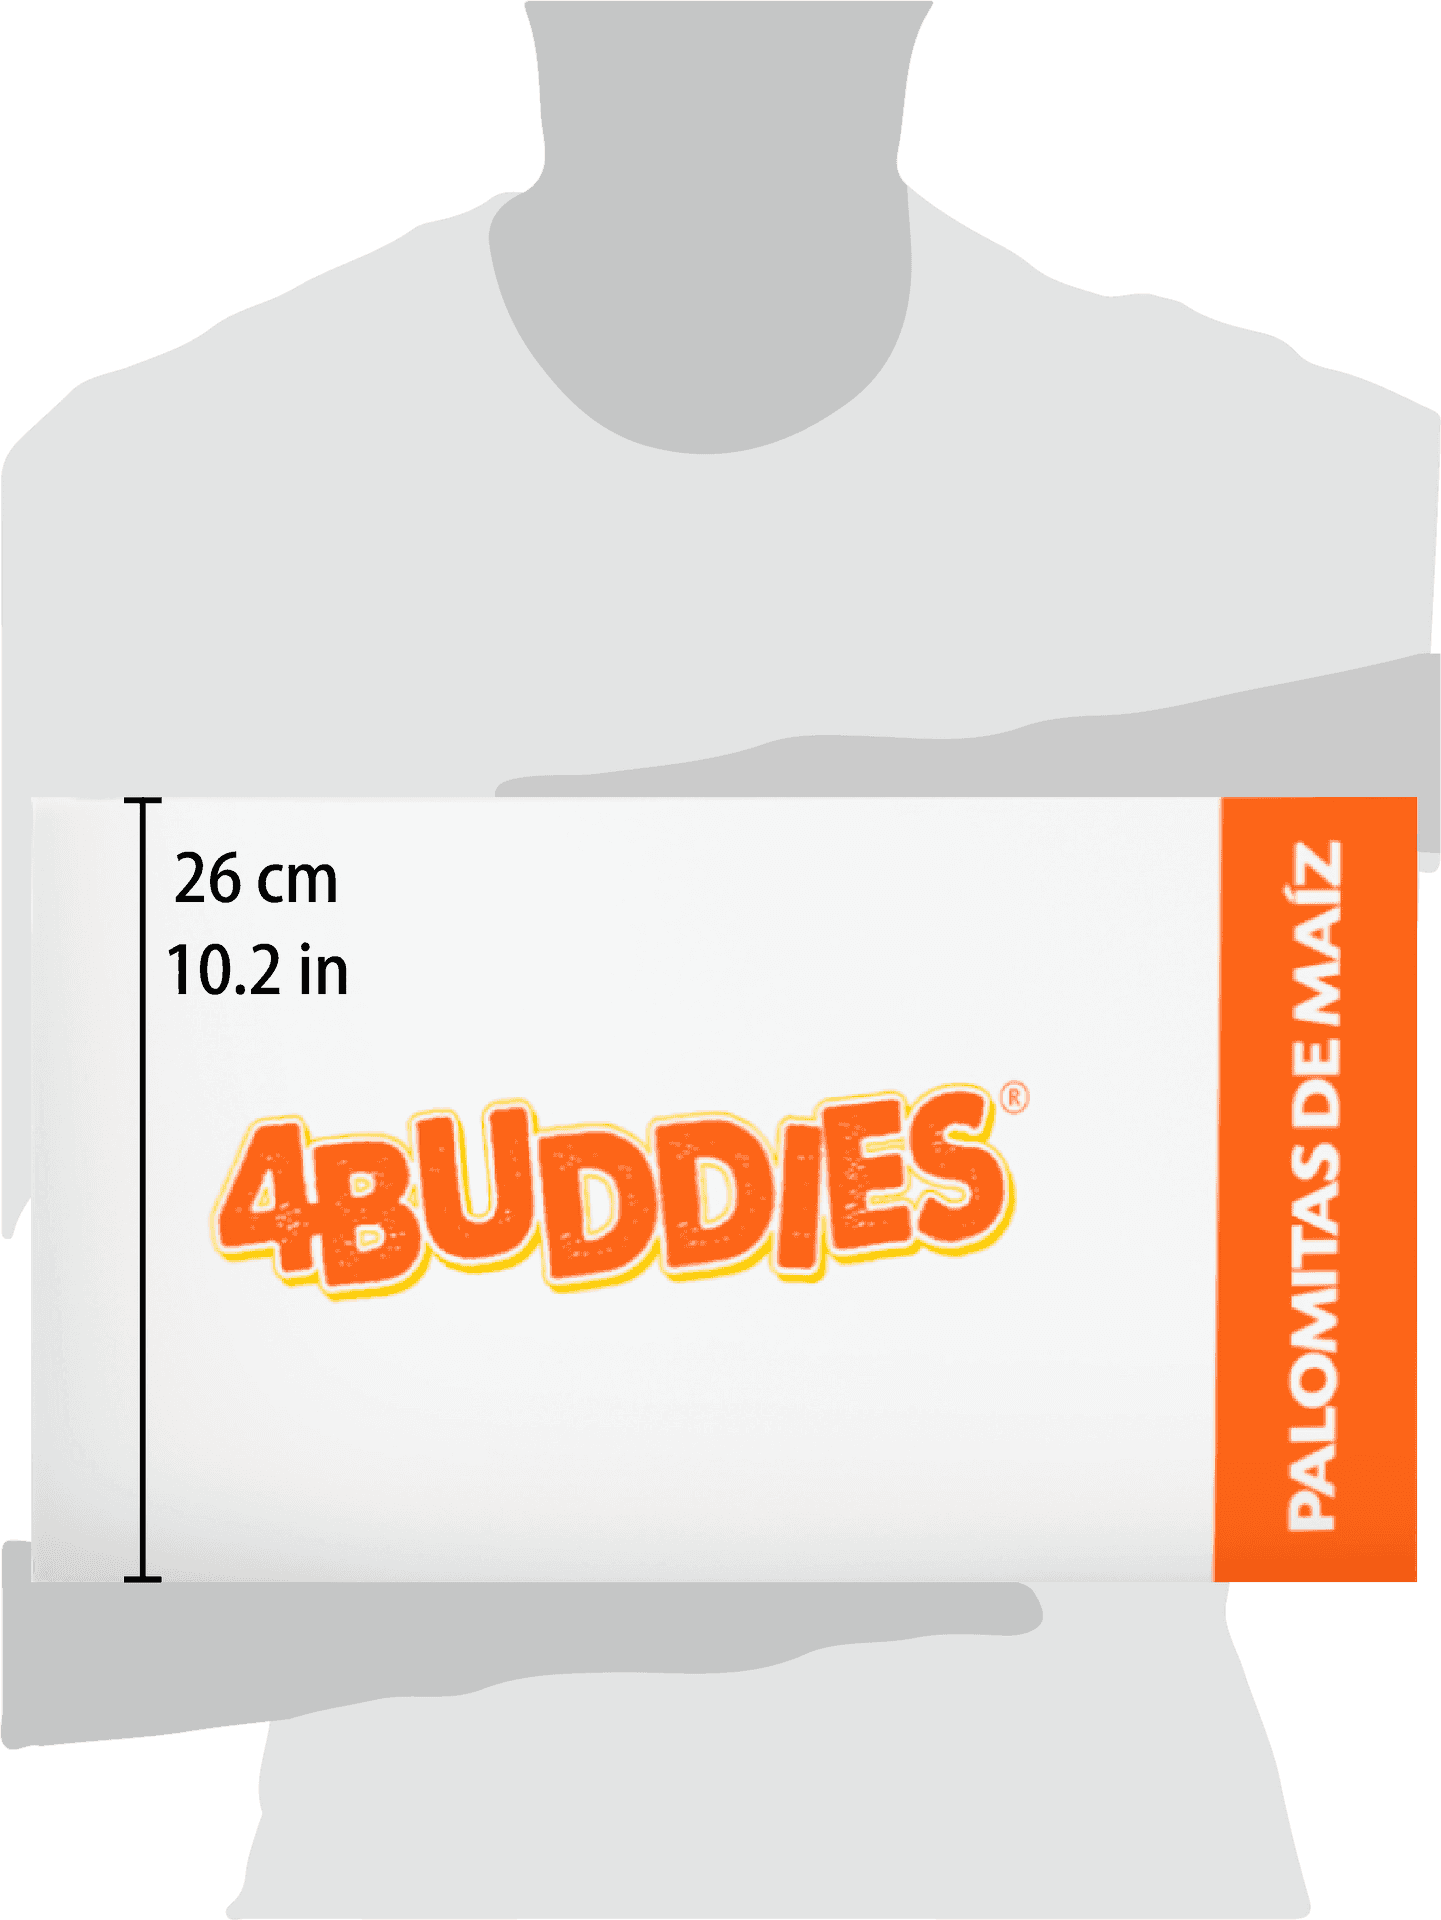 4 Buddies Popcorn Shirt Mockup PNG